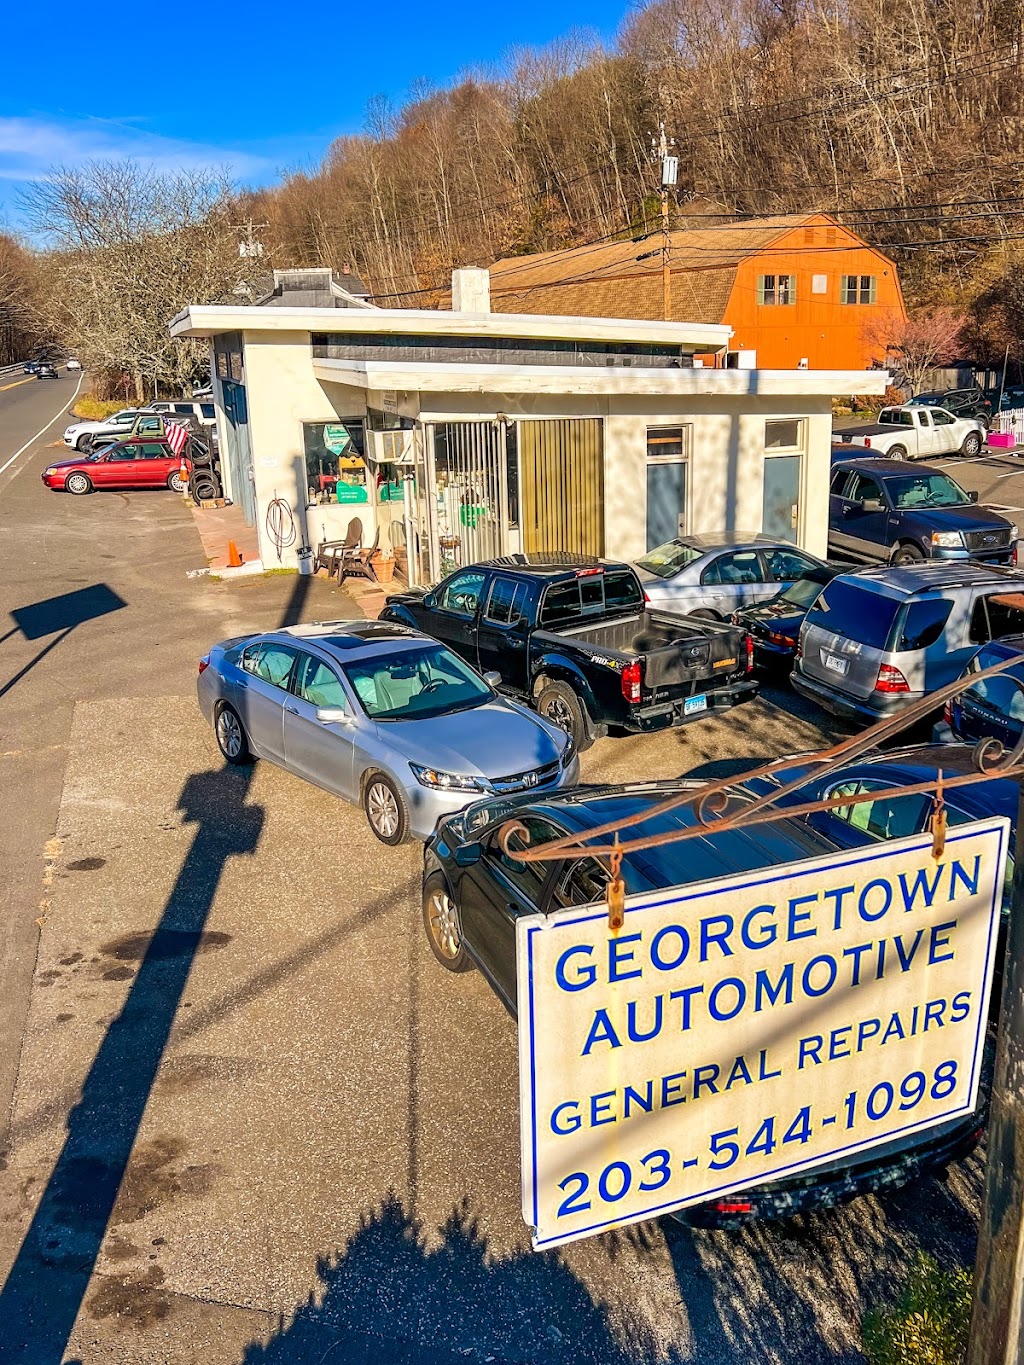 Georgetown Automotive | 54 Redding Rd, Redding, CT 06896 | Phone: (203) 544-1098